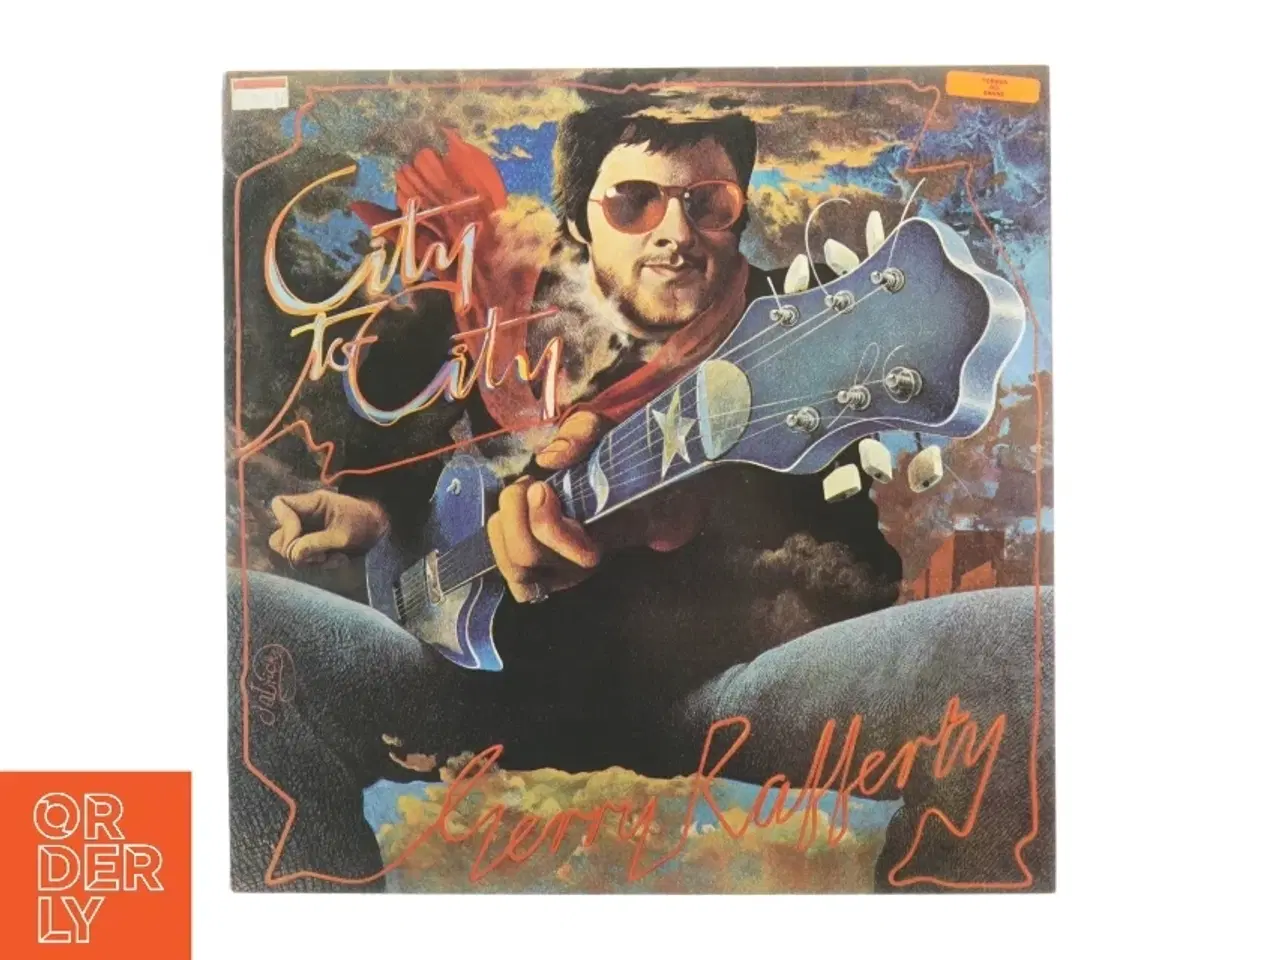 Billede 1 - Gerry Rafferty - City to City Vinyl LP fra United Artists Records (str. 31 x 31 cm)